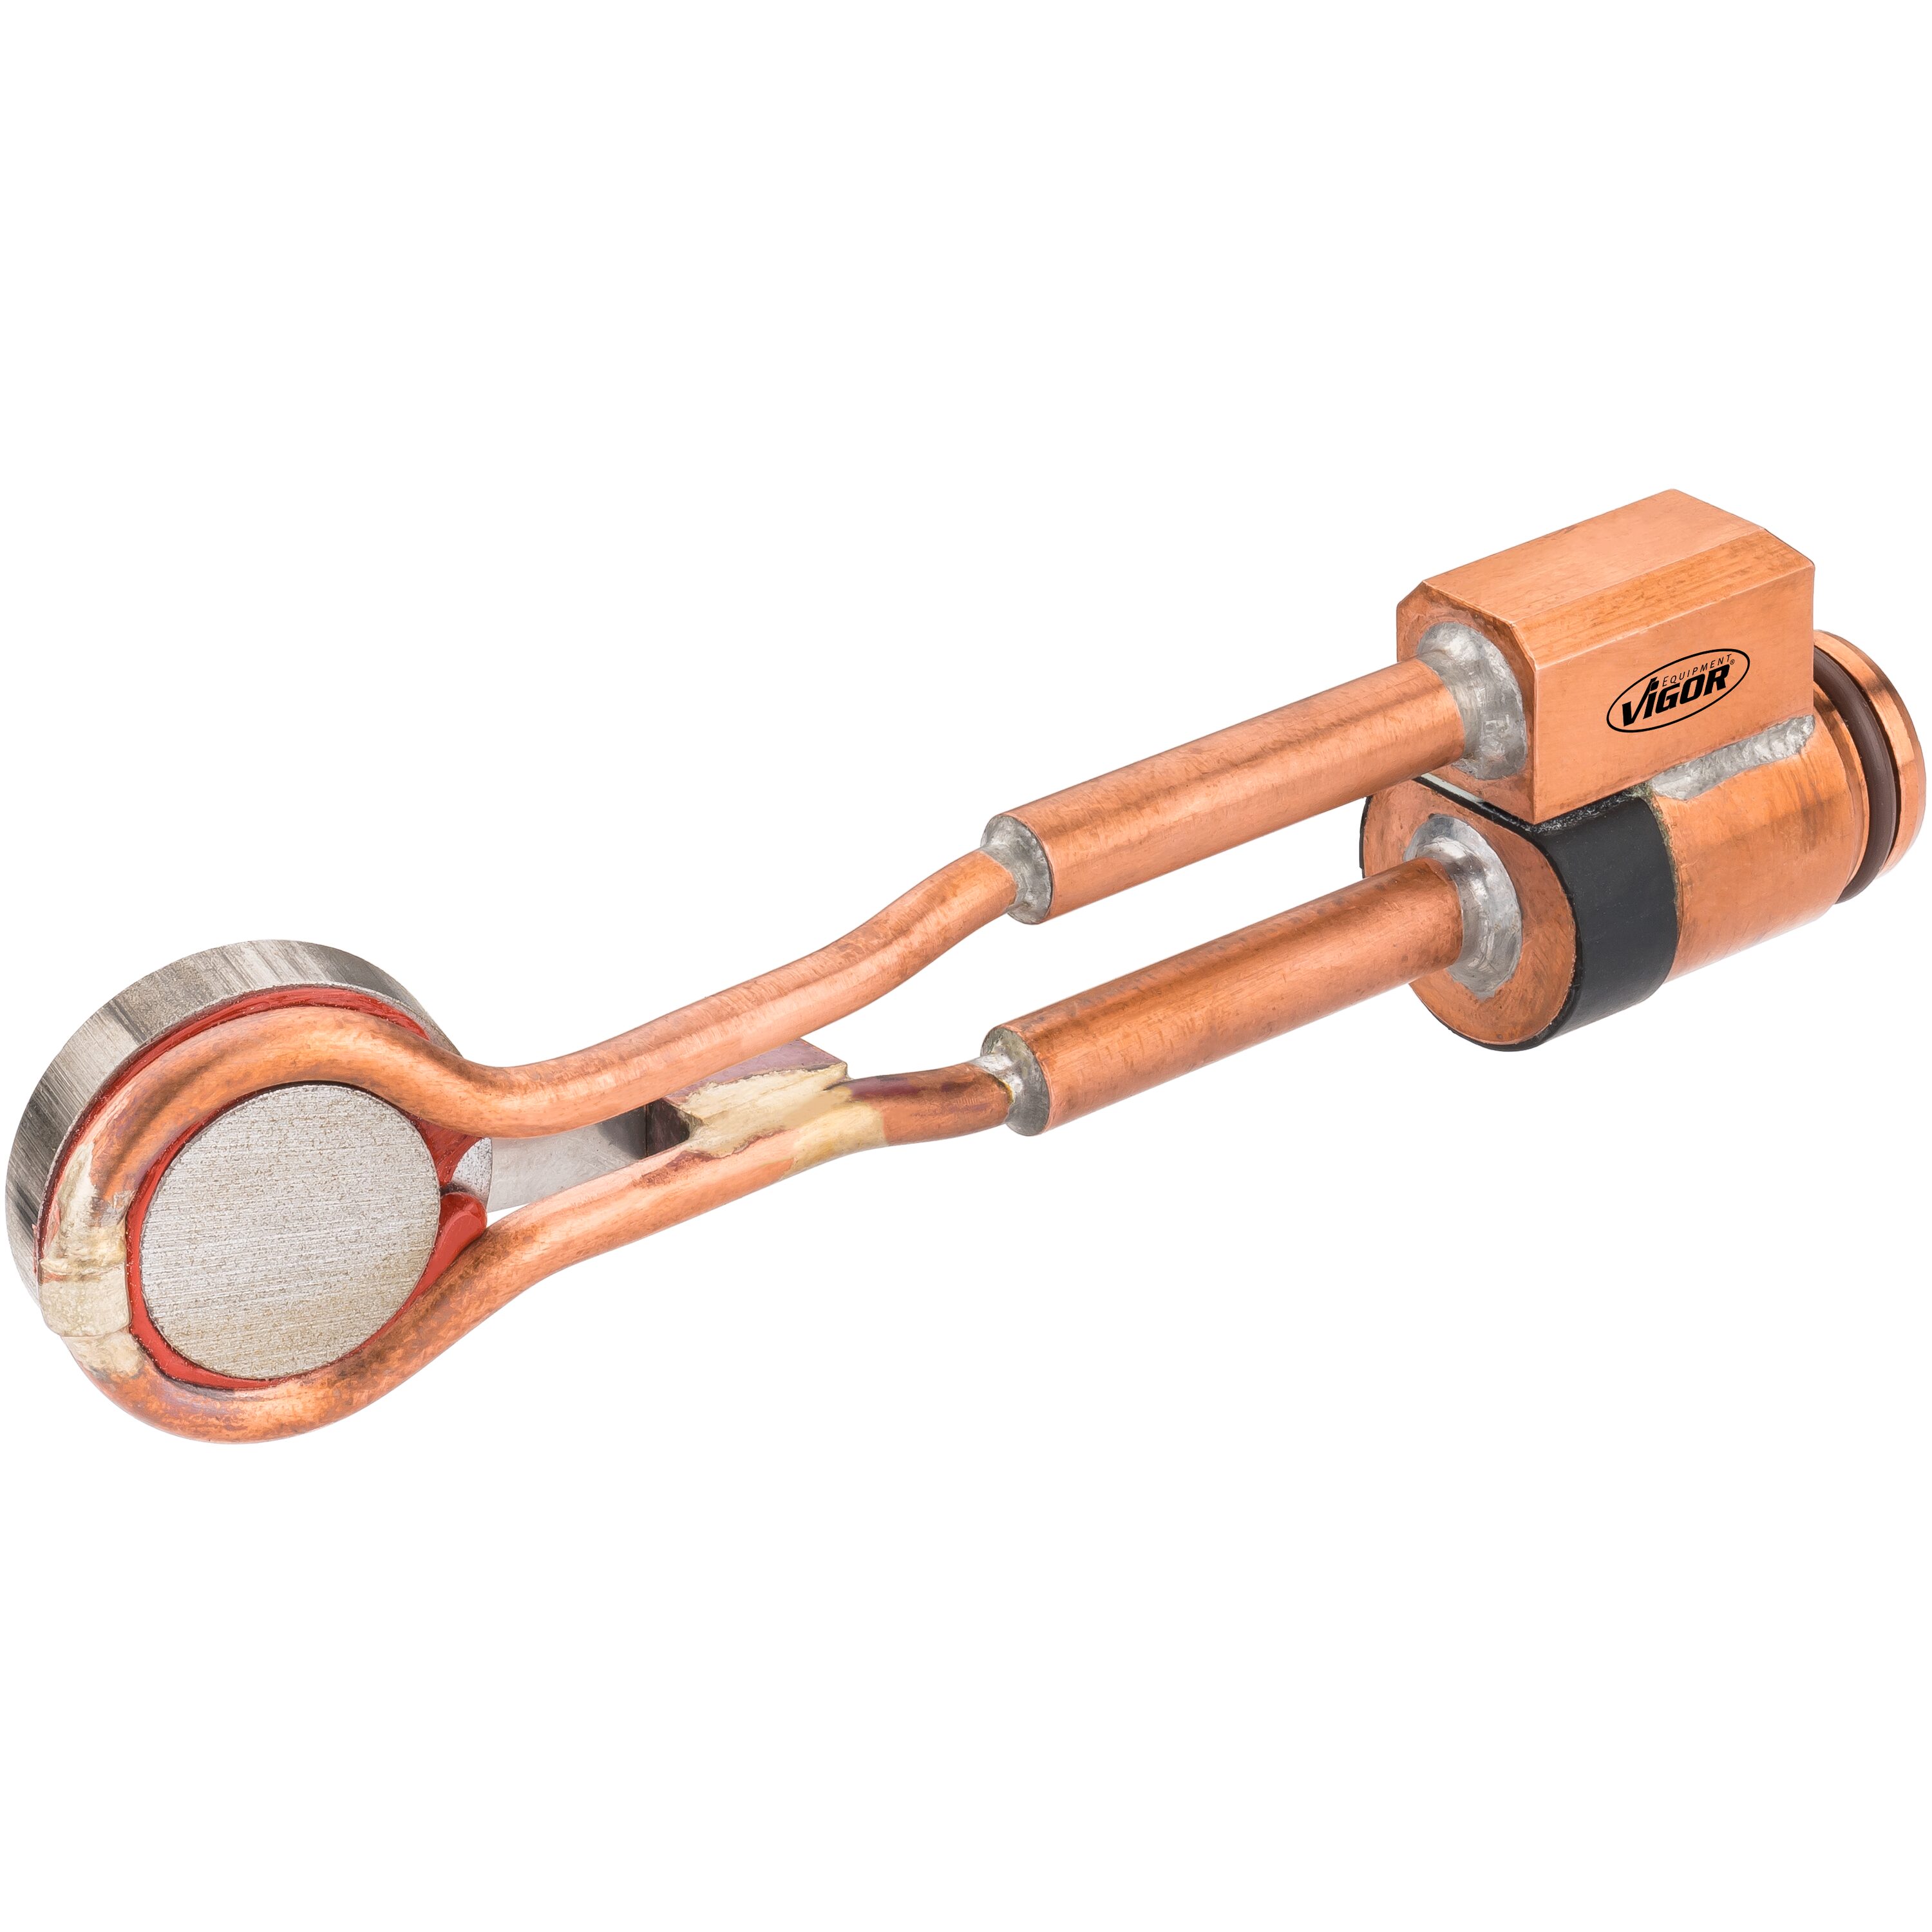 Round coil ∙ 32 mm, Karosserie Werkzeug, Induction heater and accessories, Body, product worlds